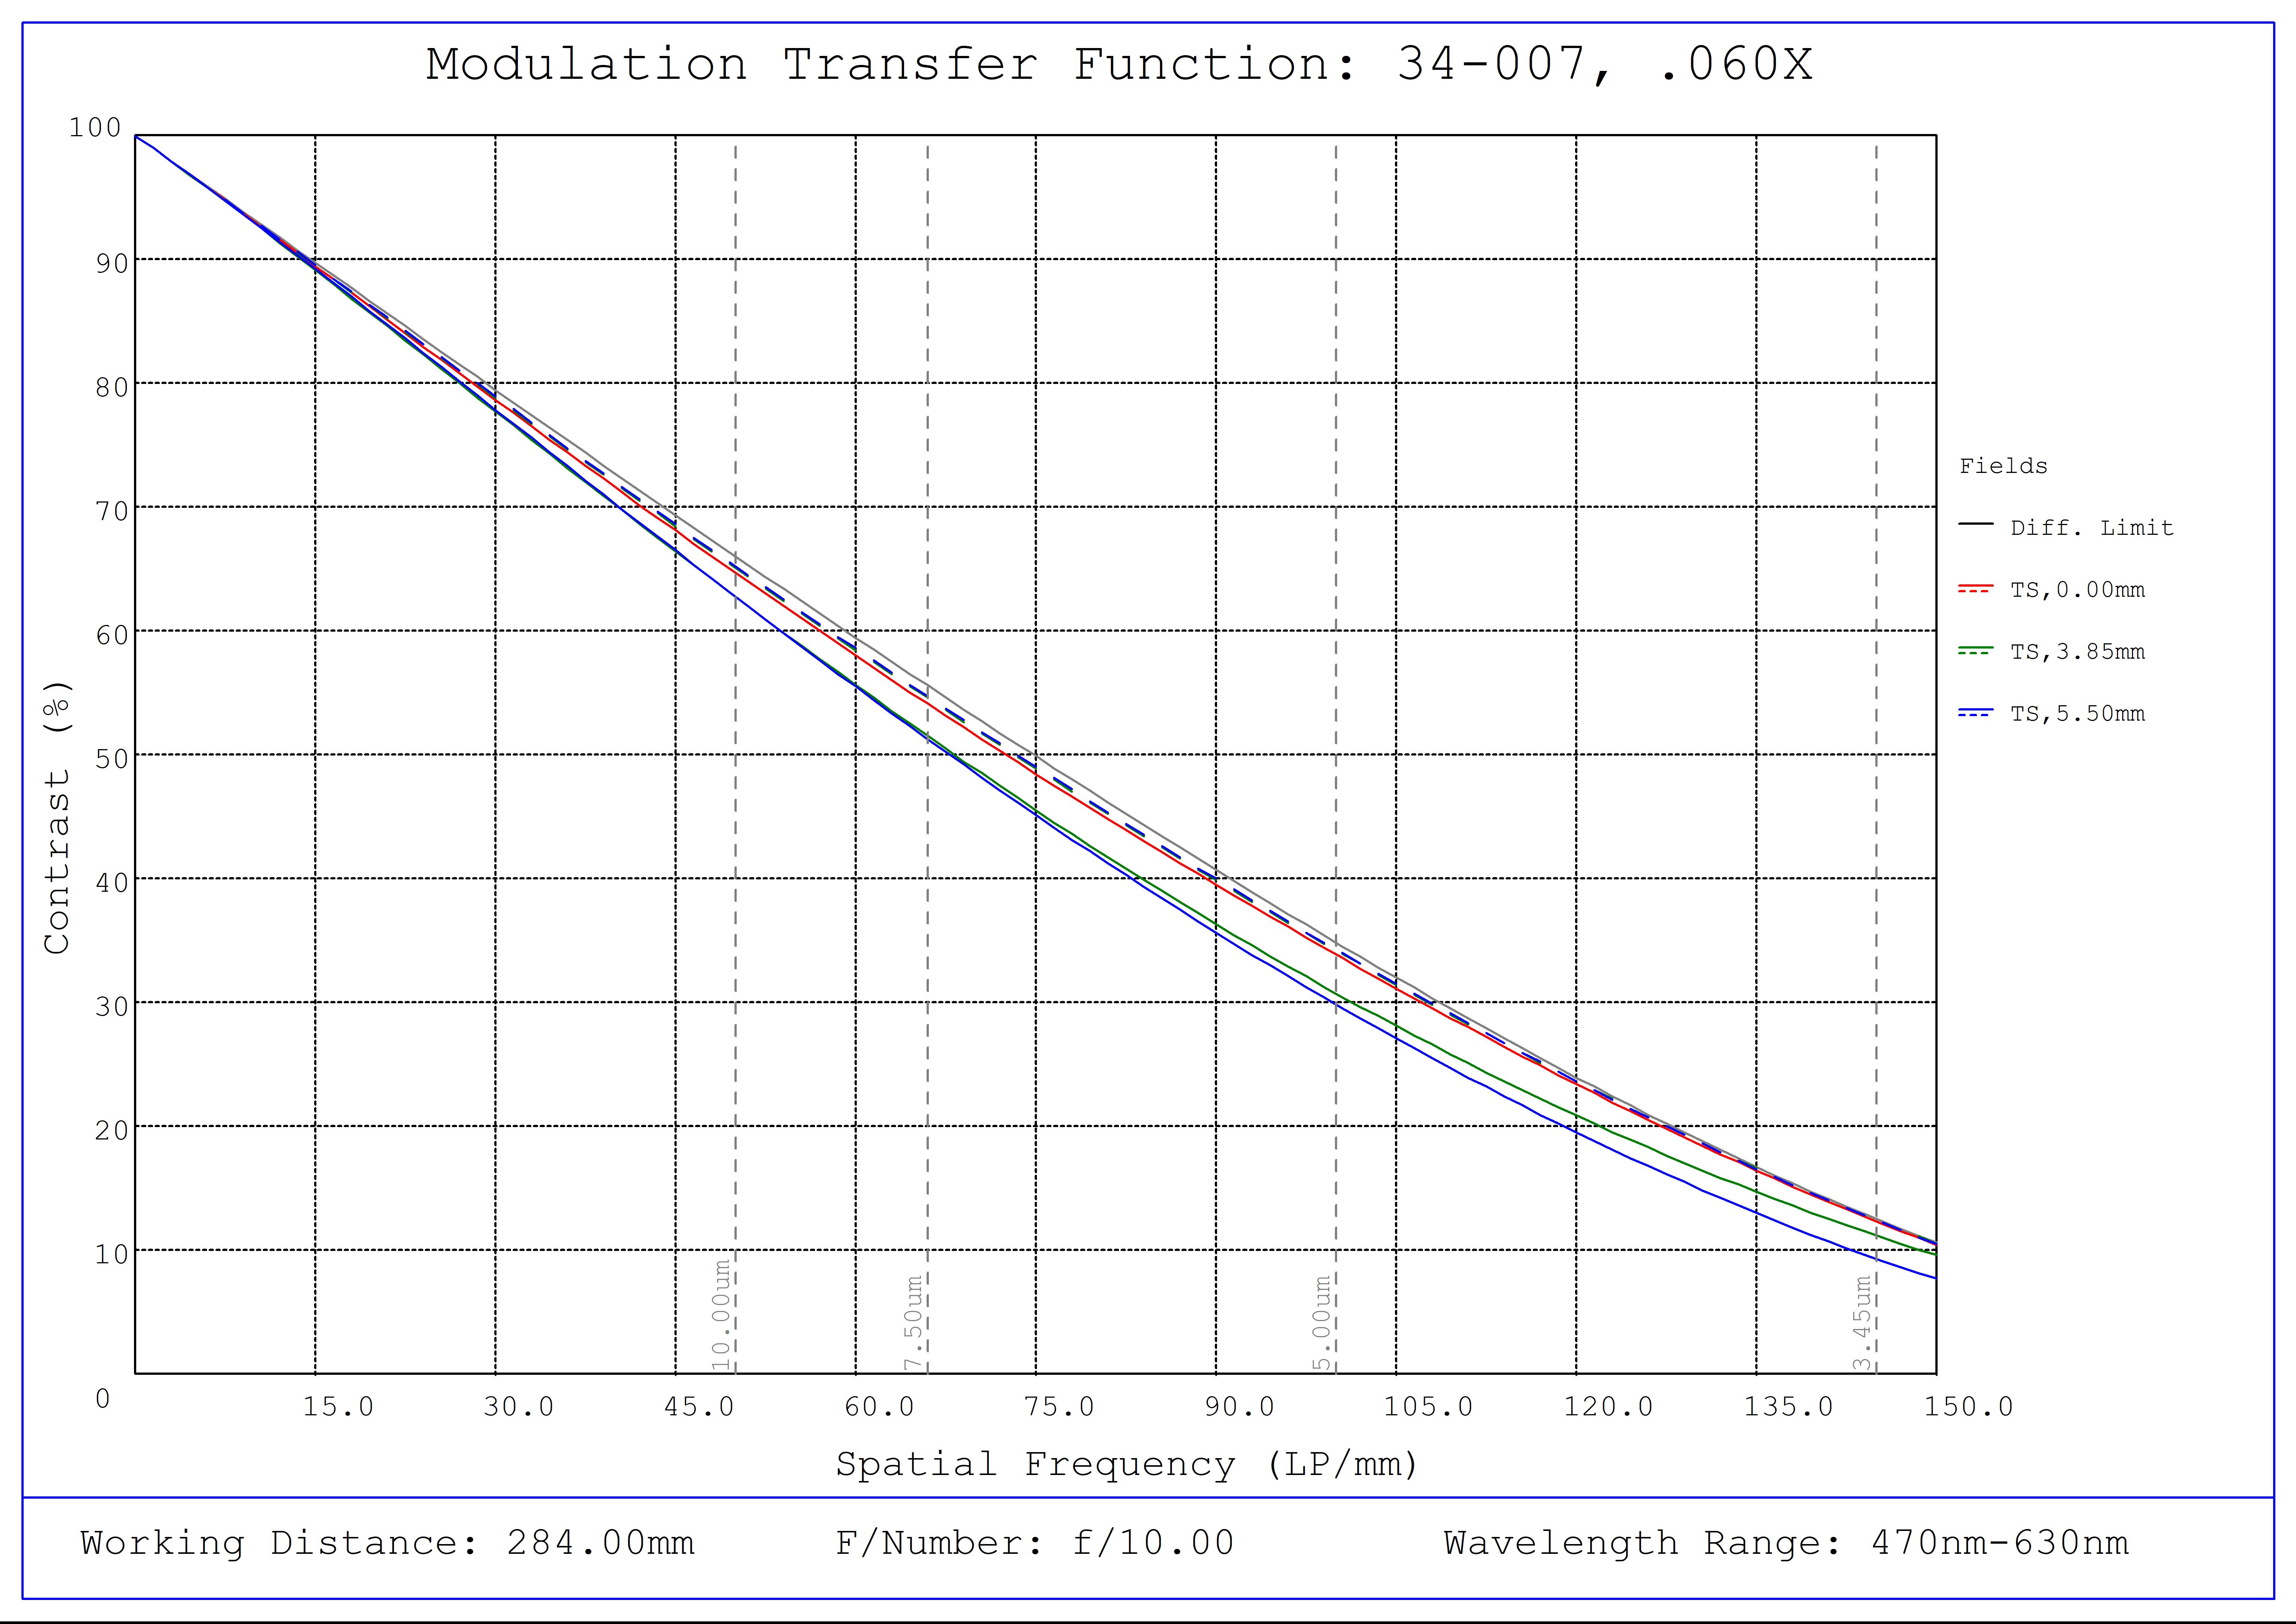 #34-007, 0.060X, 2/3" C-Mount TitanTL® Telecentric Lens, Modulated Transfer Function (MTF) Plot, 284mm Working Distance, f10